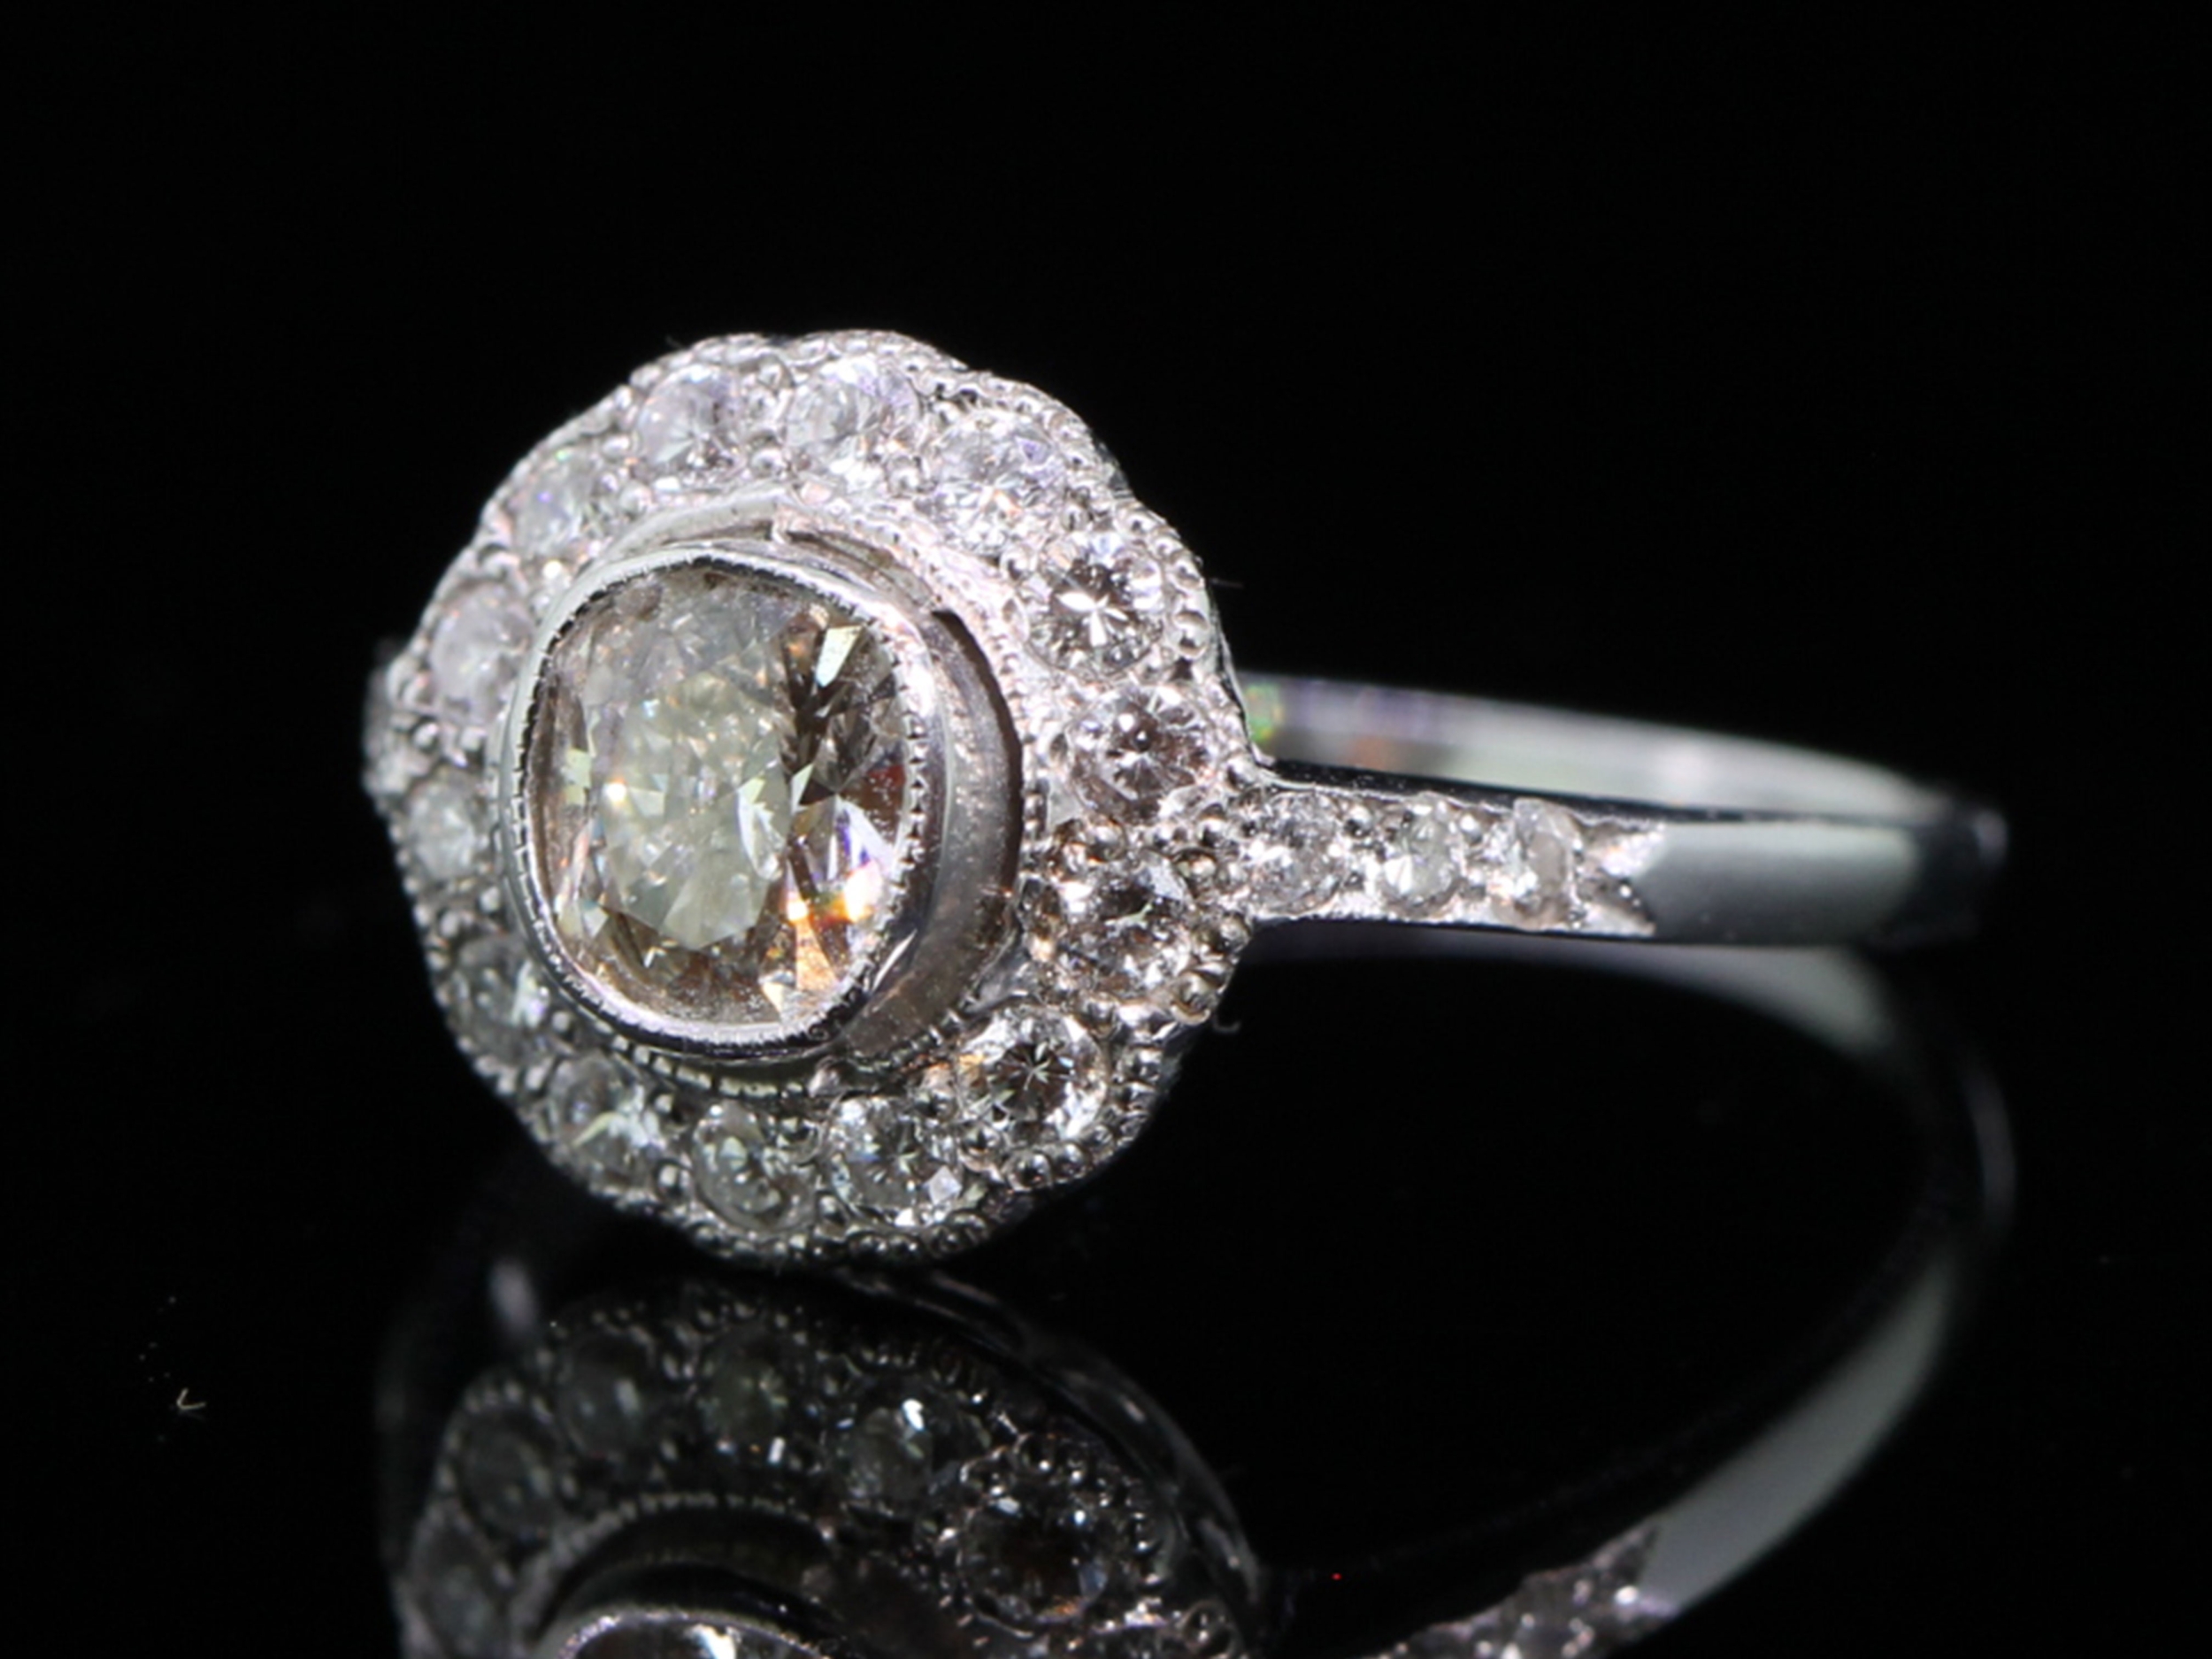  Breathtaking Vintage Inspired 18ct Gold Diamond Halo Ring